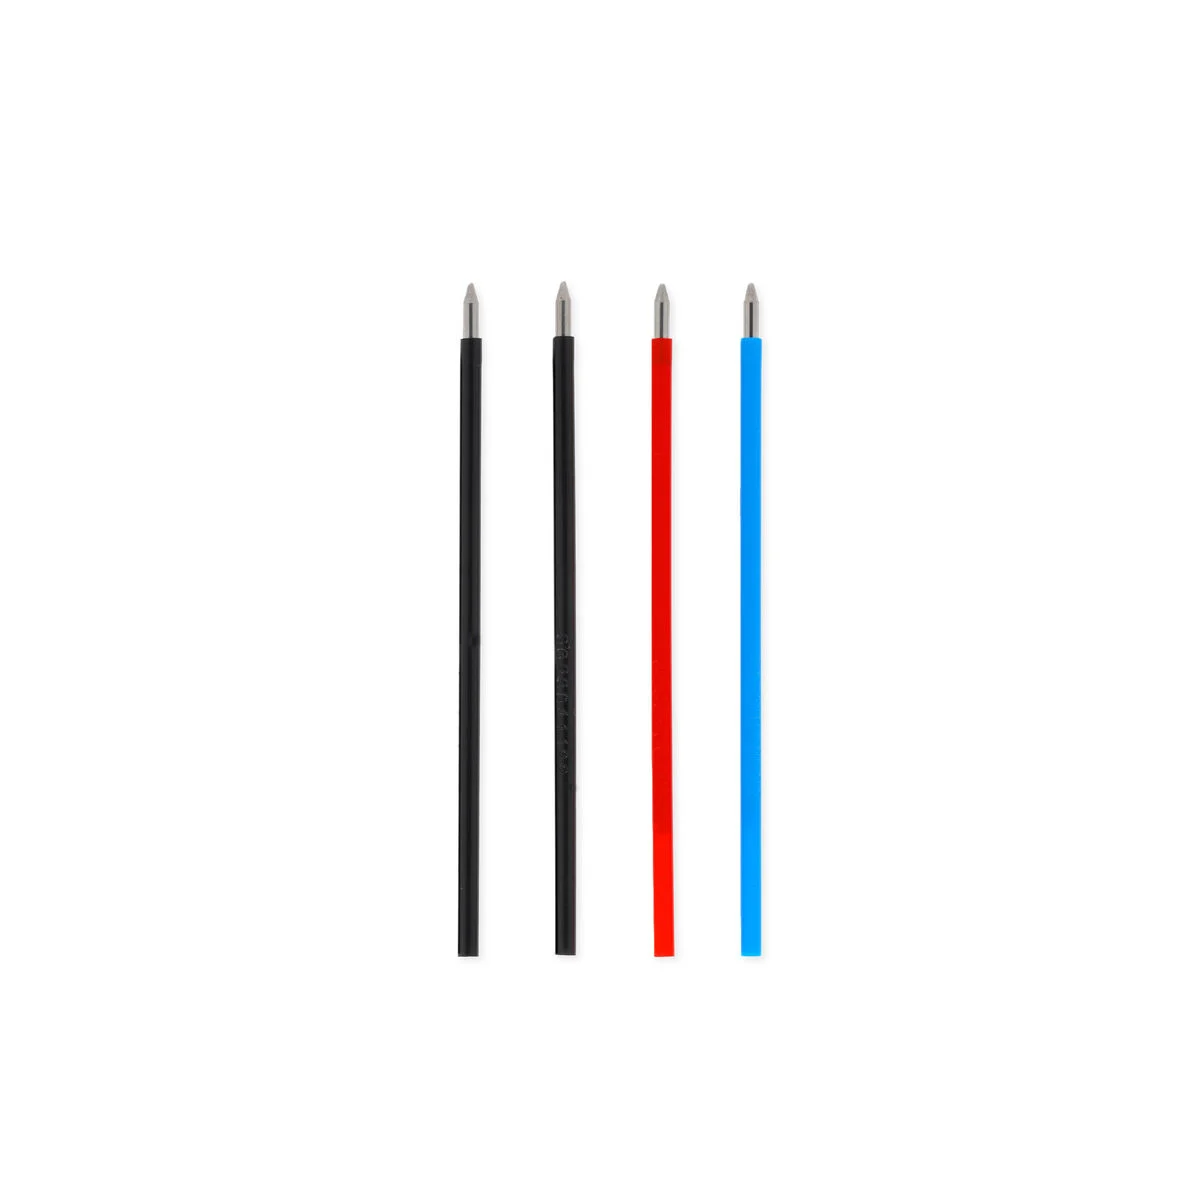 Refill per penna cancellabile a tre colori - 4 pezzi - Cartolibreria Gianna